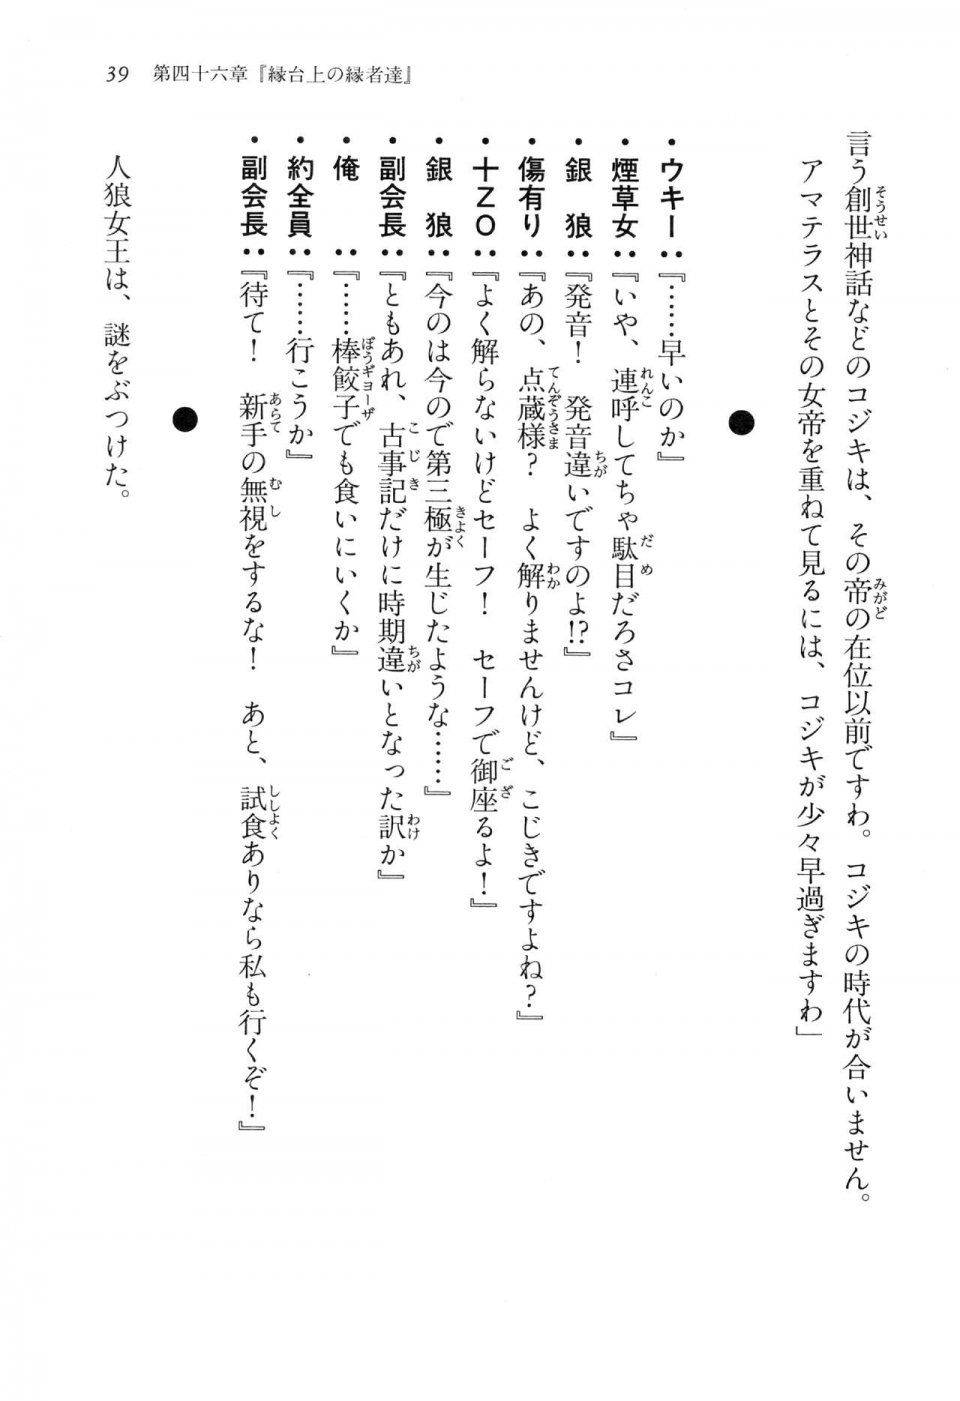 Kyoukai Senjou no Horizon LN Vol 15(6C) Part 1 - Photo #39